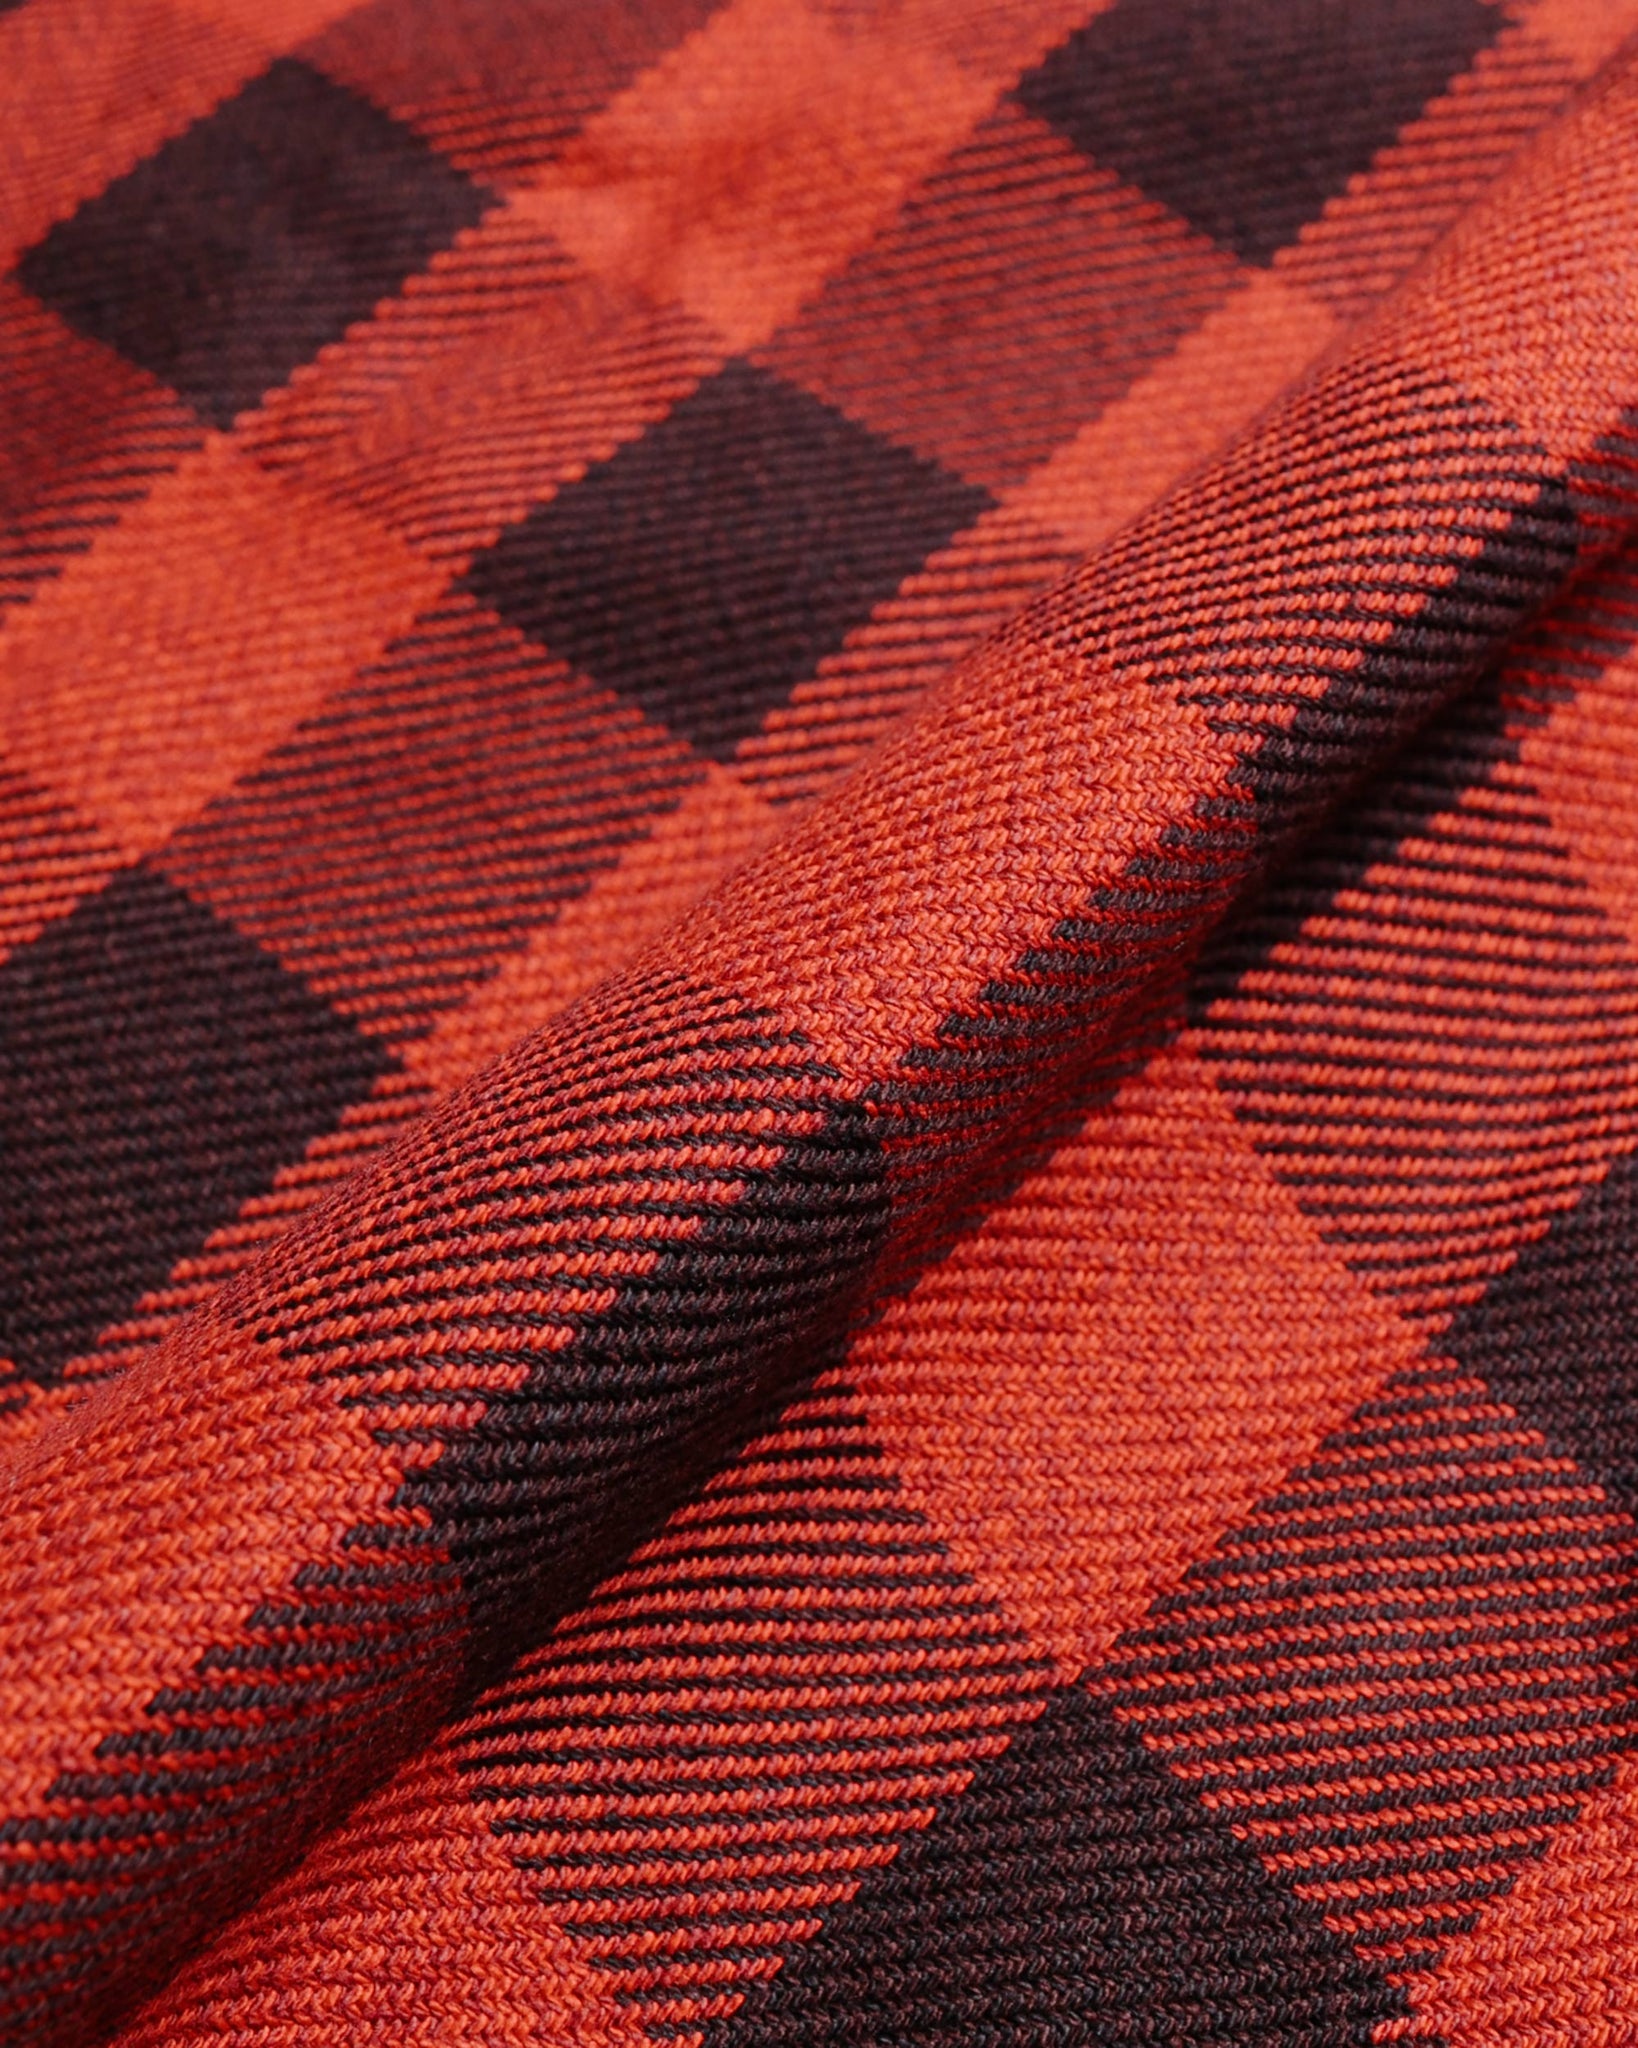 The Real McCoy's MS23104 8HU Twisted-Yarn Buffalo Check Flannel Shirt Red/Black fabric